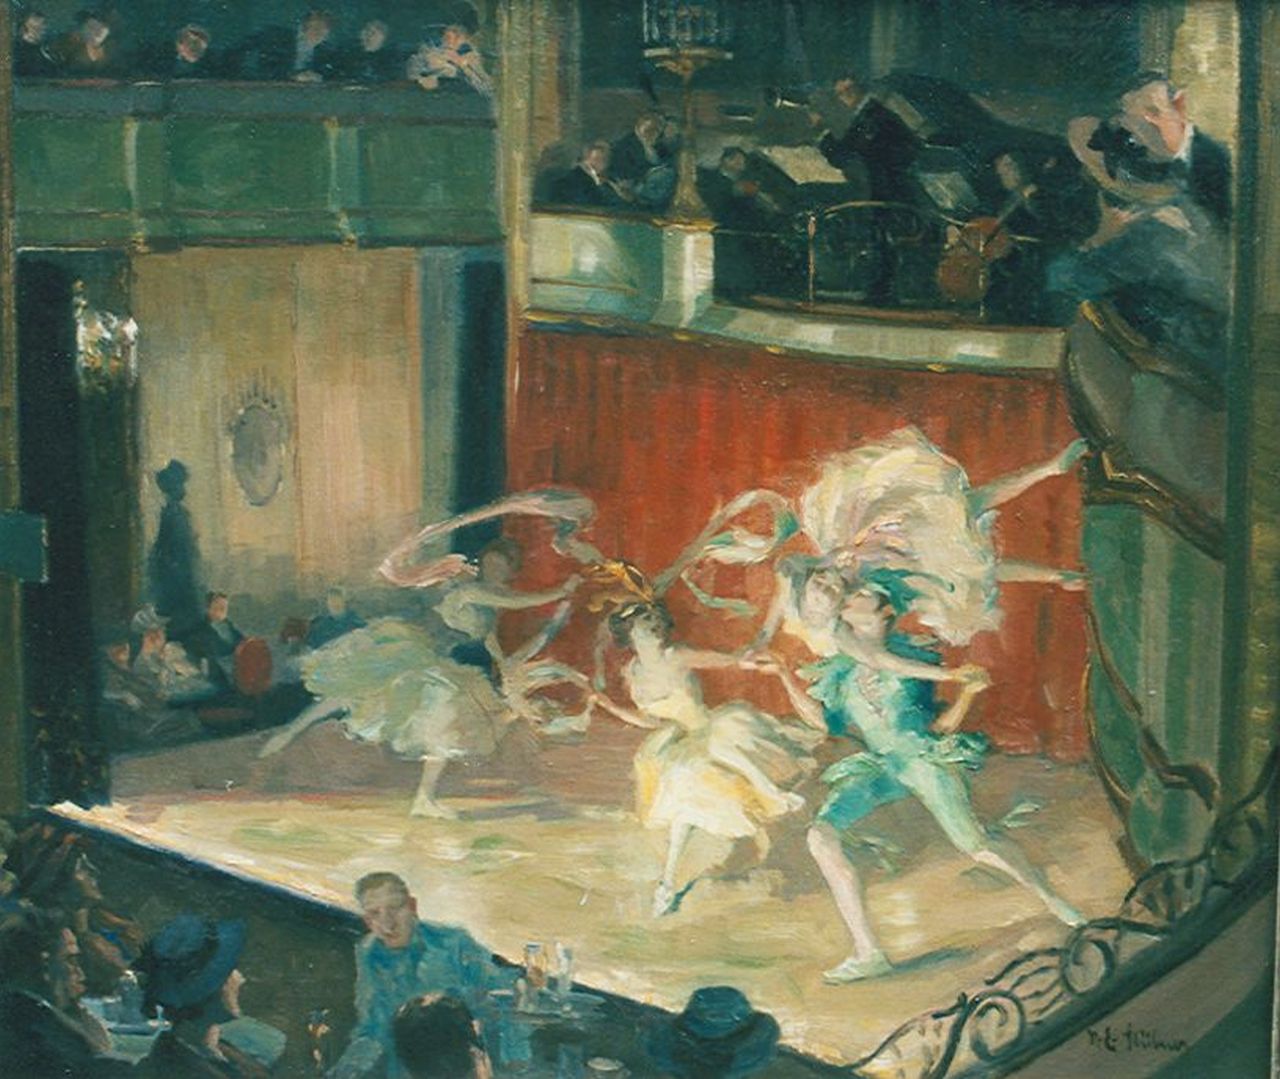 Stübner R.E.  | Robert Emil Stübner, The performance, oil on canvas 61.0 x 71.0 cm, signed l.r.